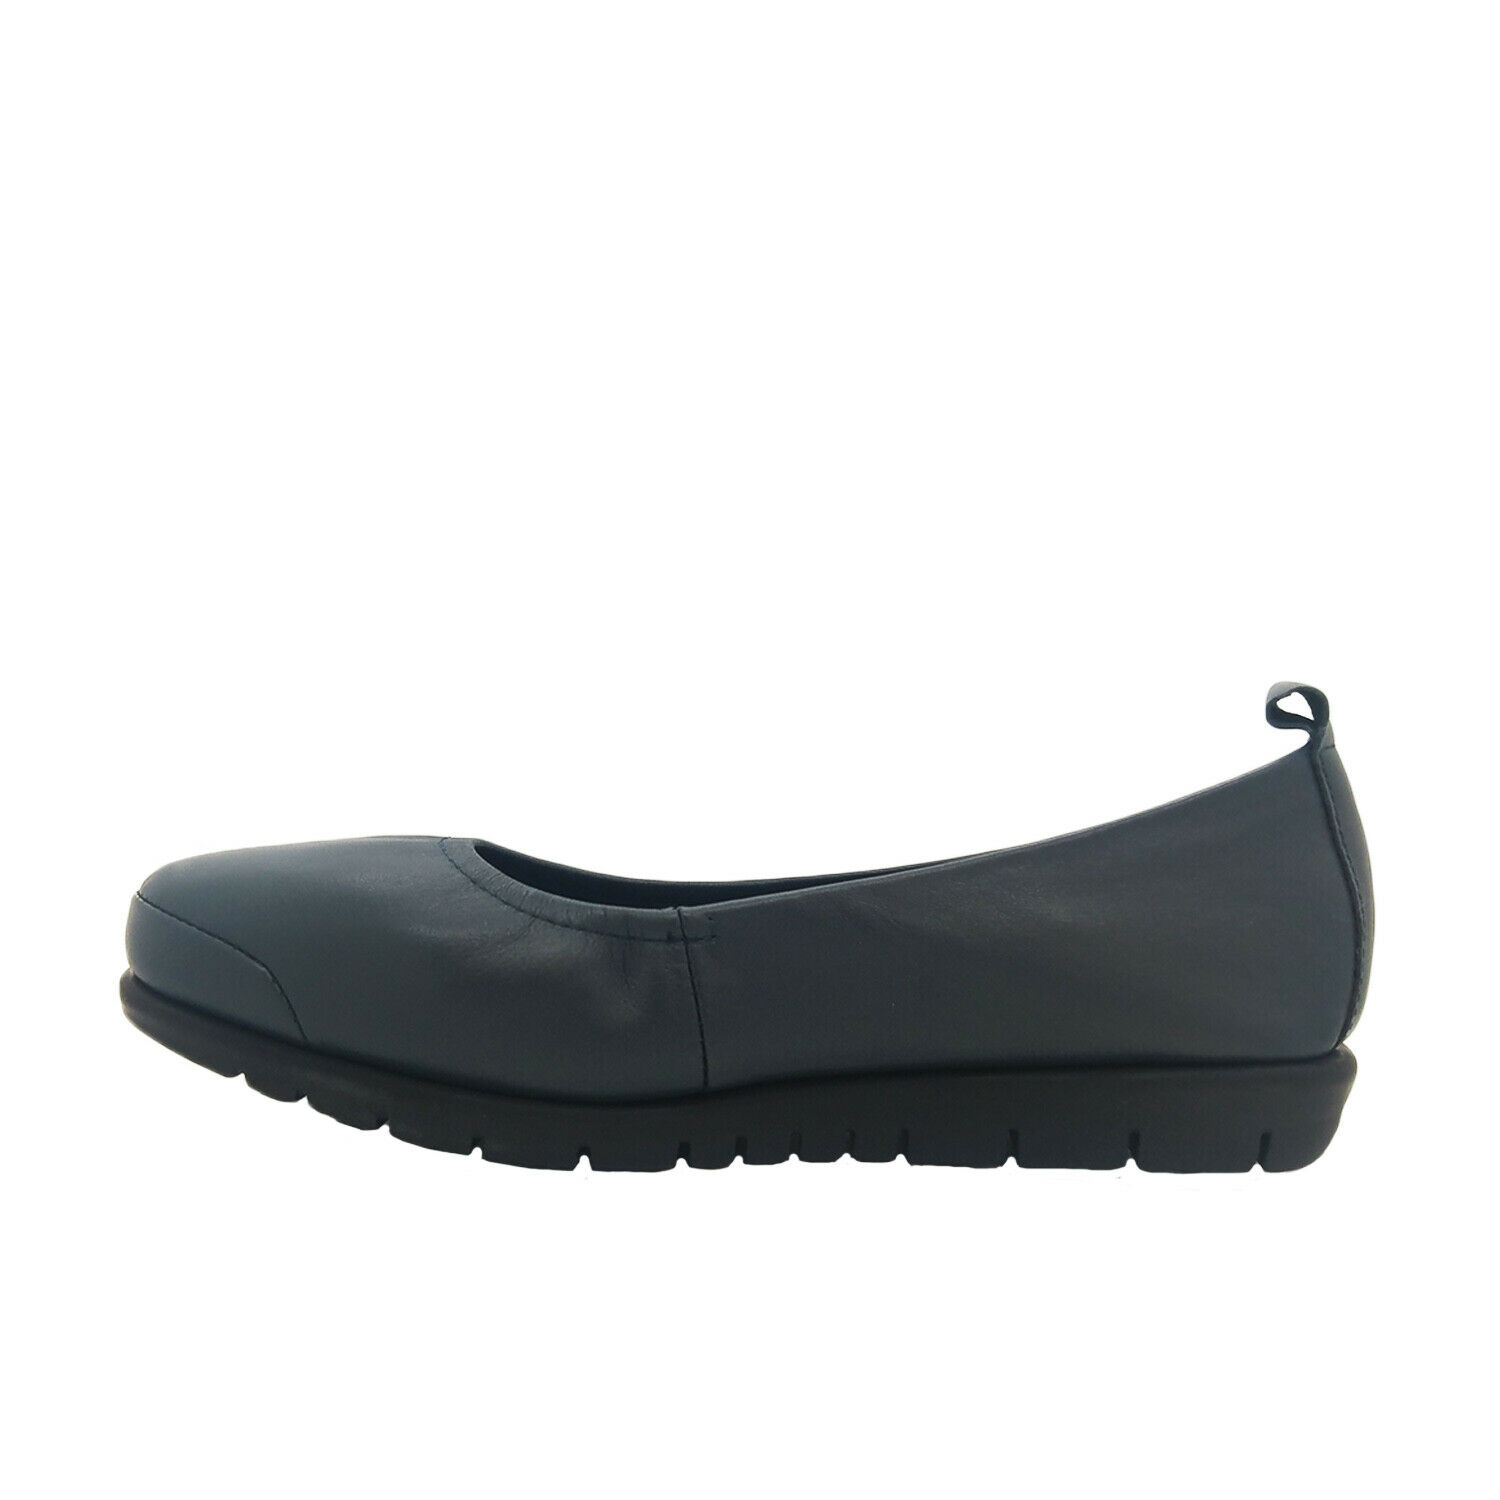 Ladies Shoes Borelli Comfy Leather Ballet Flat Elastic Comfort Soft ...